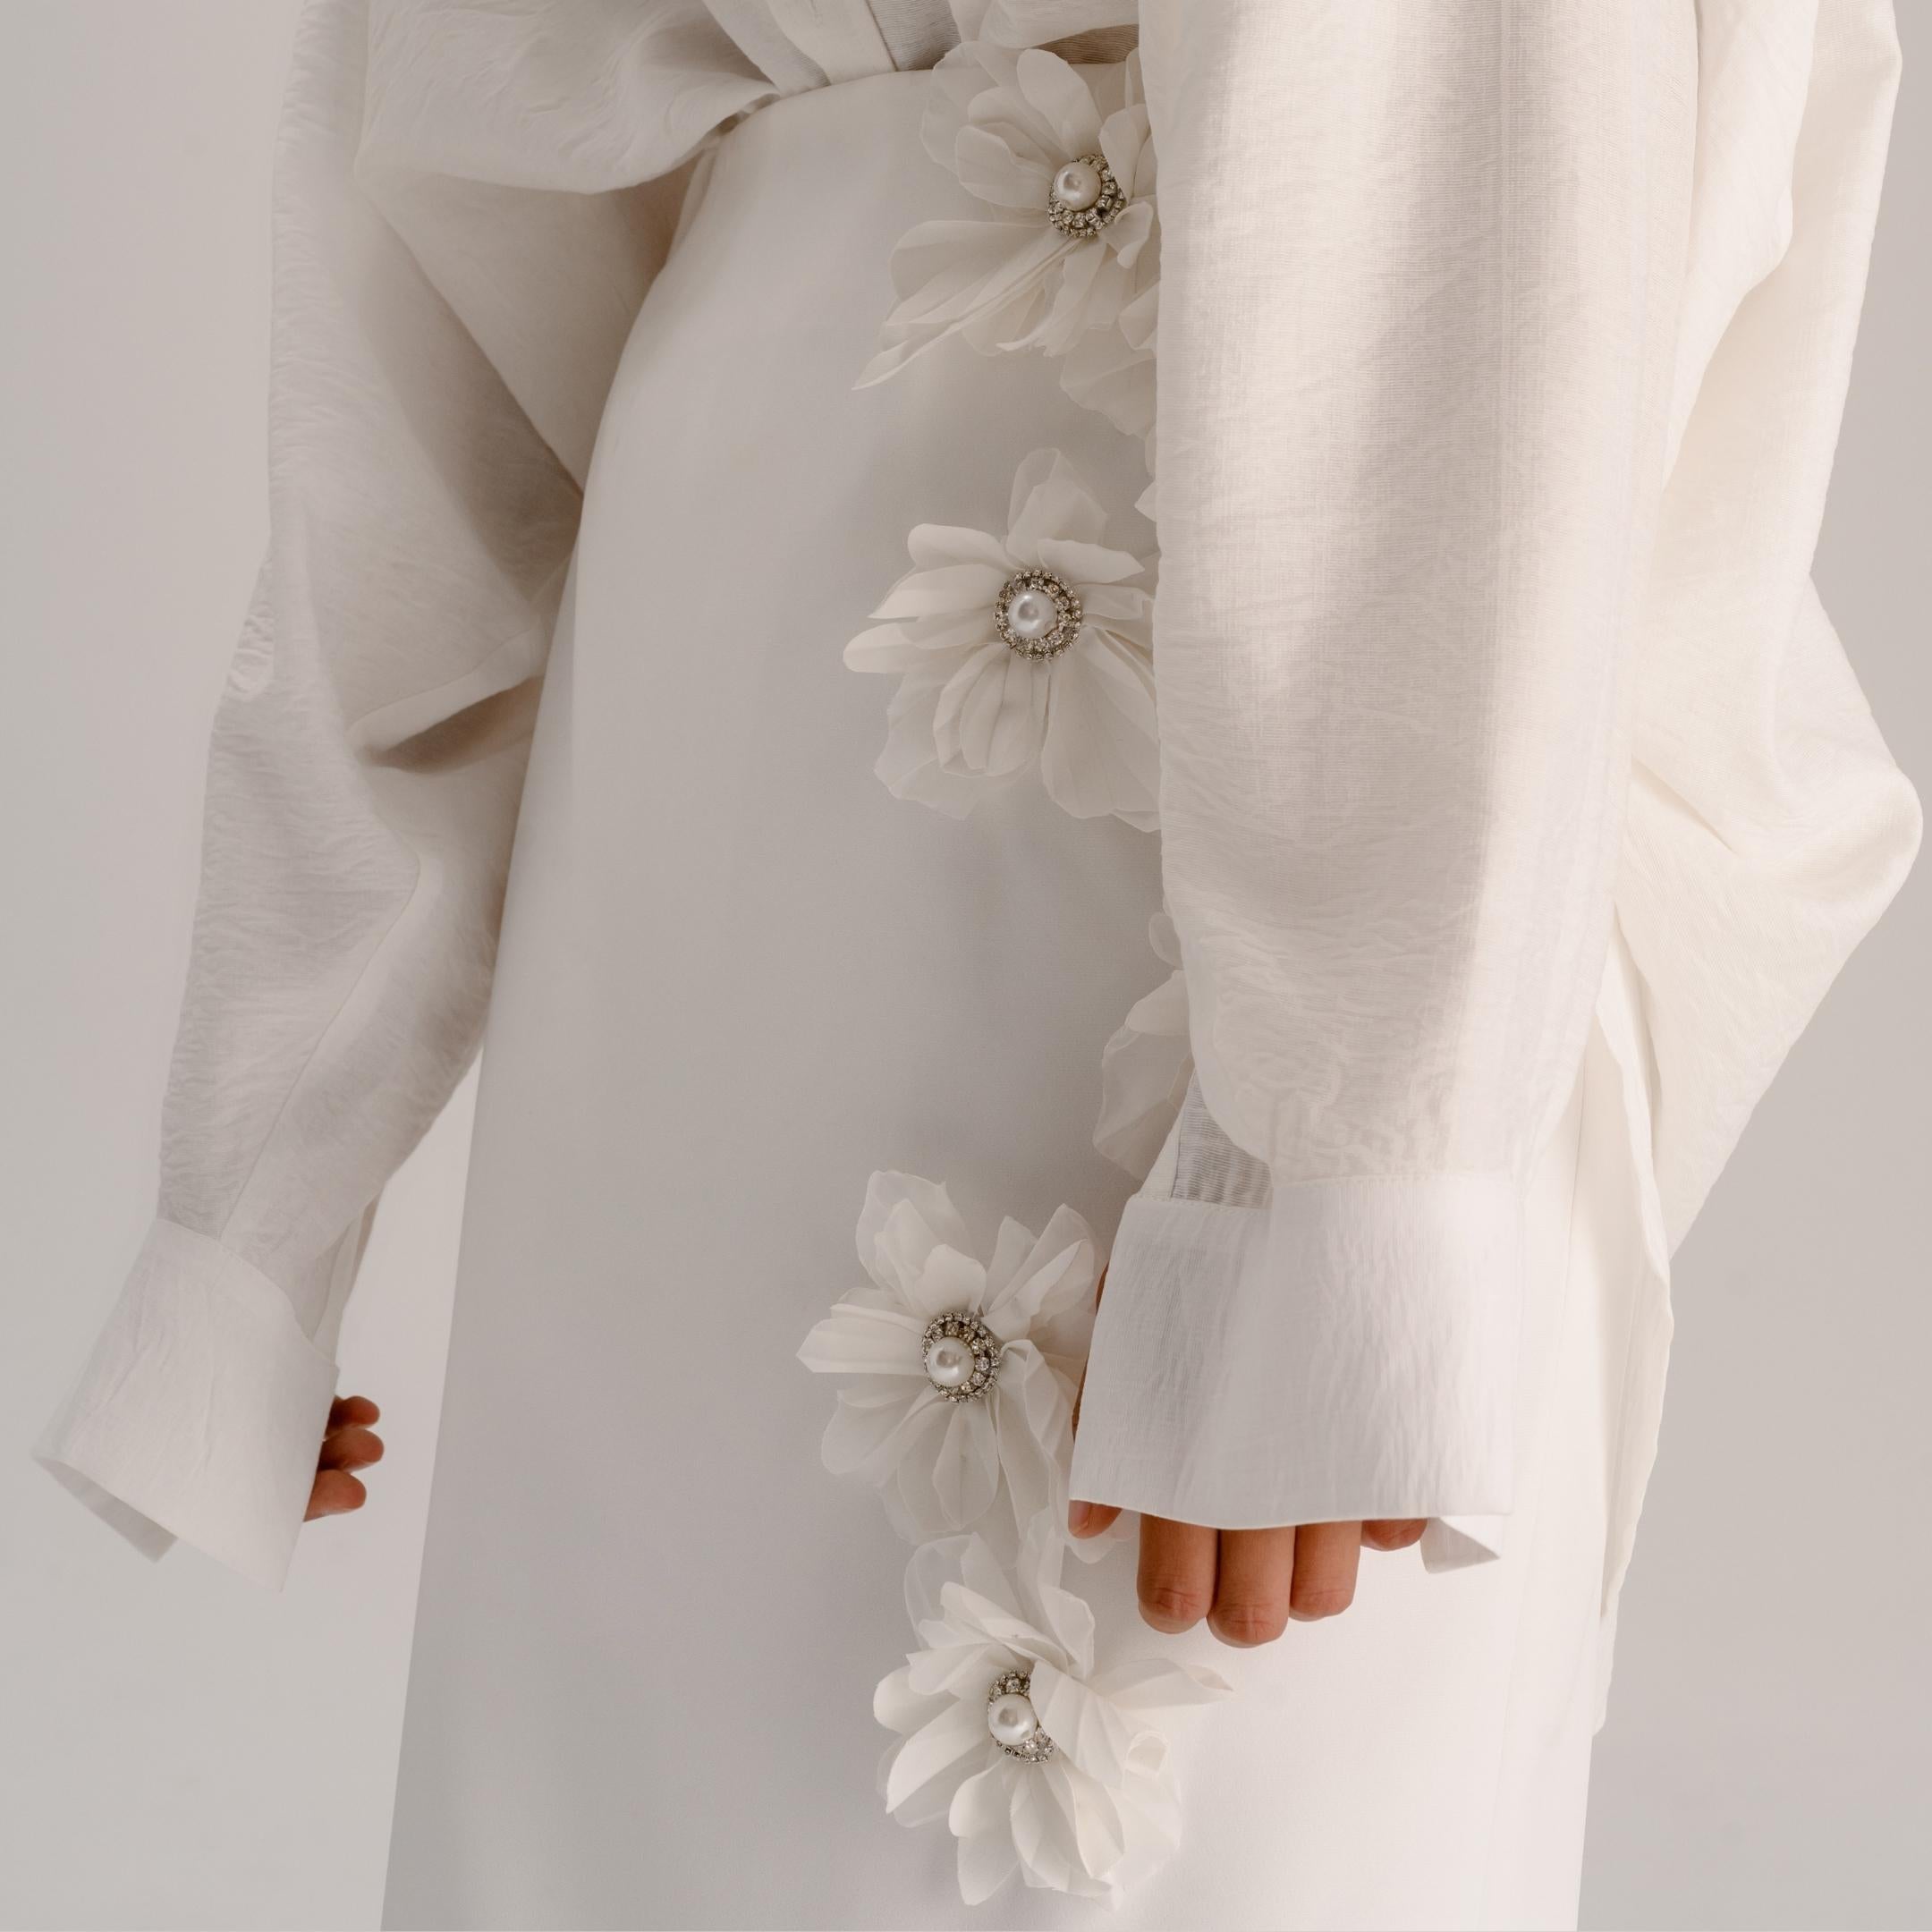 Milk skirt with flower details